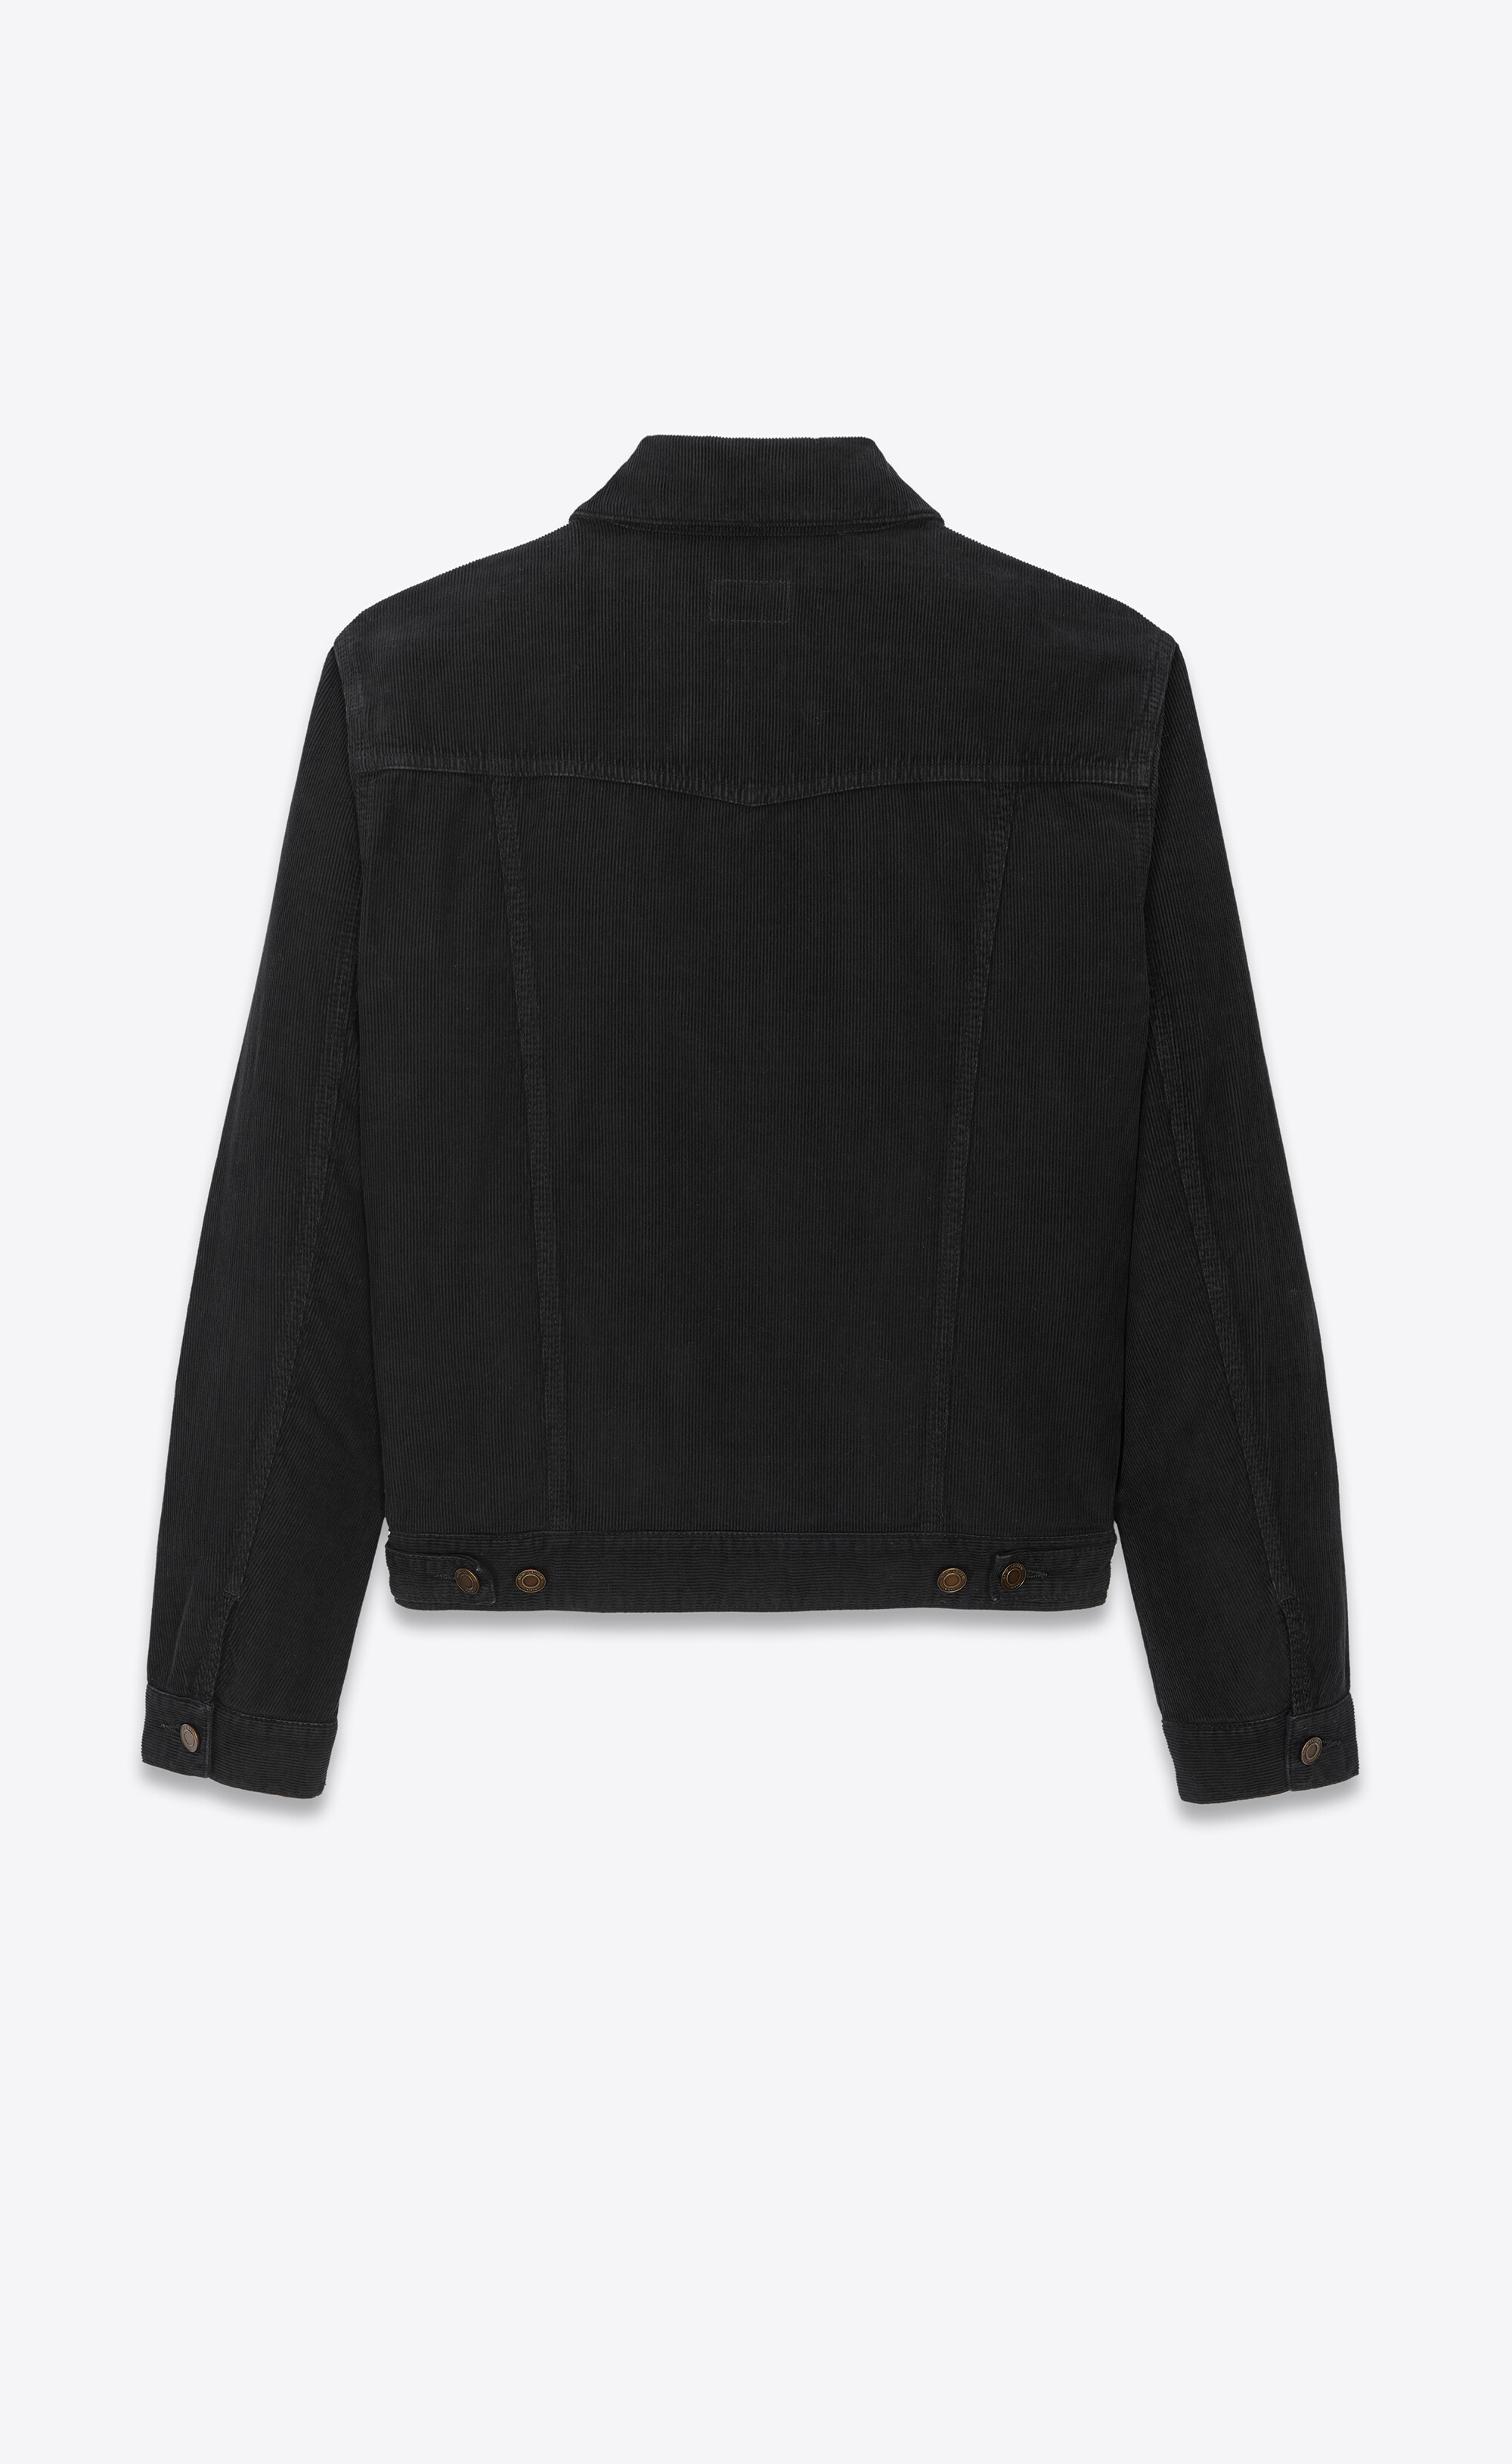 SAINT LAURENT classic jacket in black stonewash corduroy | REVERSIBLE